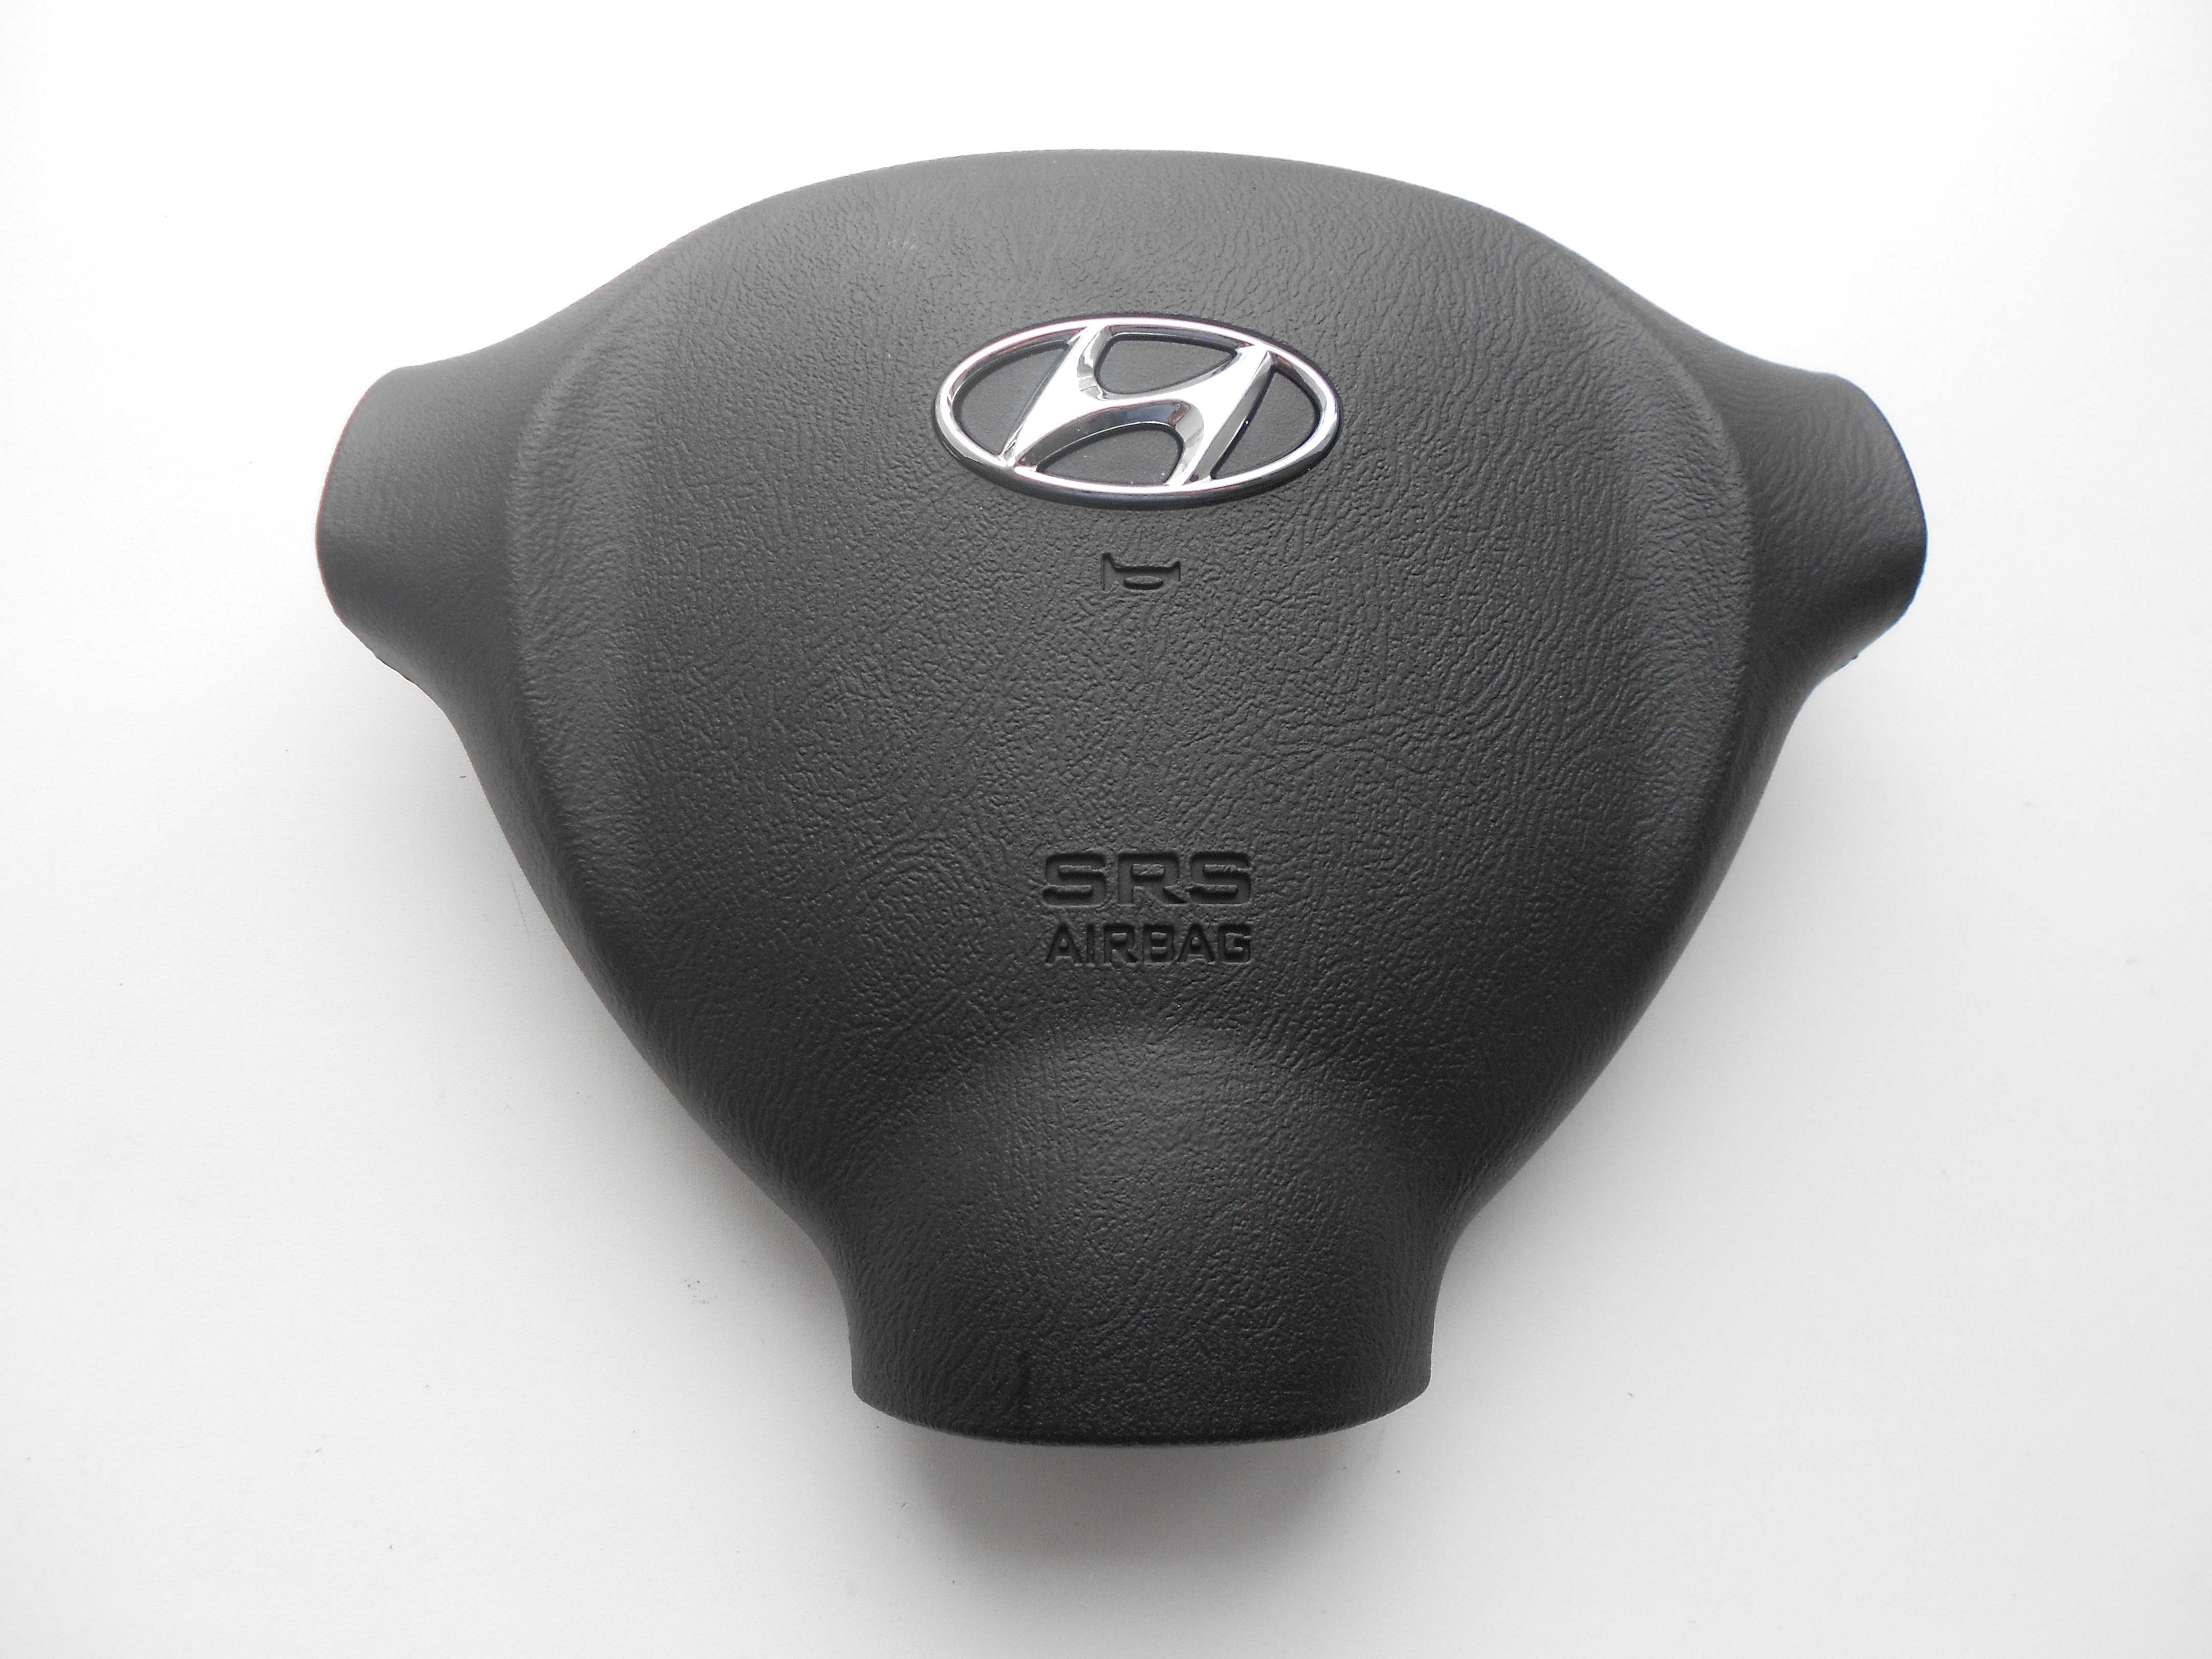 Рулевая подушка безопасности. Крышка airbag Hyundai Santa Fe Classic. Airbag заглушка муляж Hyundai Santa-Fe. Заглушка руля Санта Фе. Подушка безопасности Хендай Санта Фе.